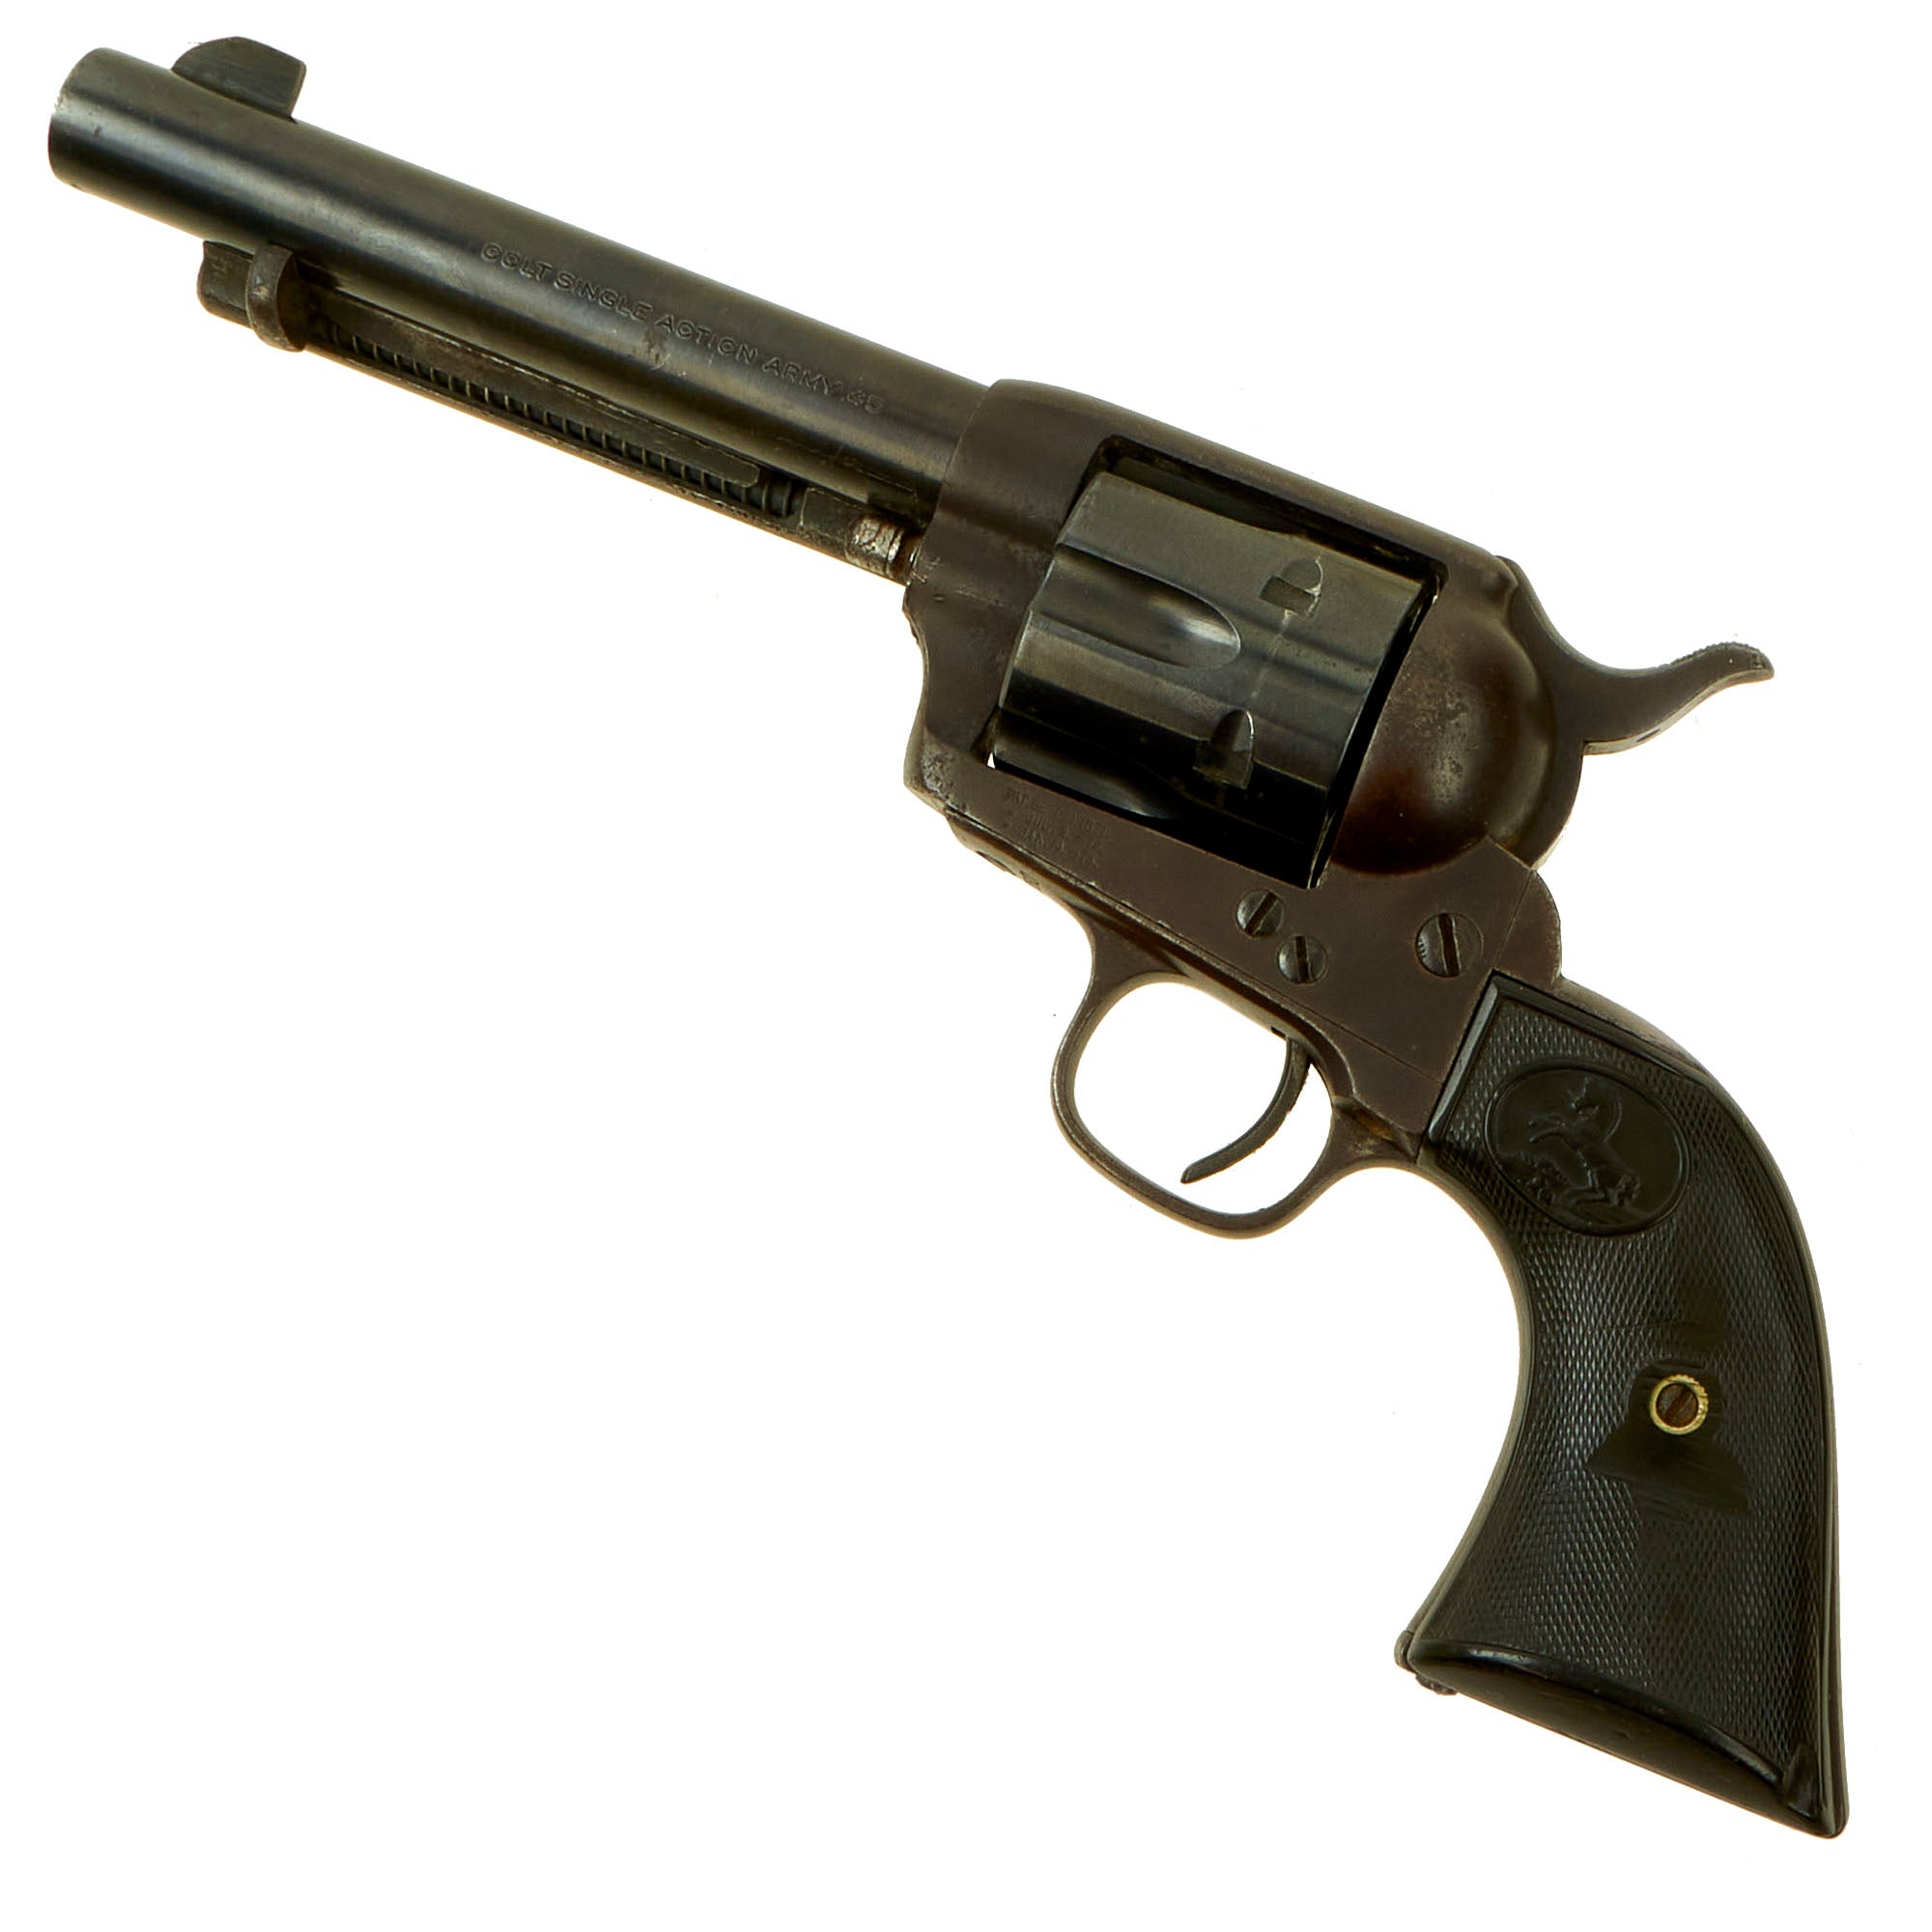 Original U.S. Colt .45cal Single Action Army Revolver made in 1881